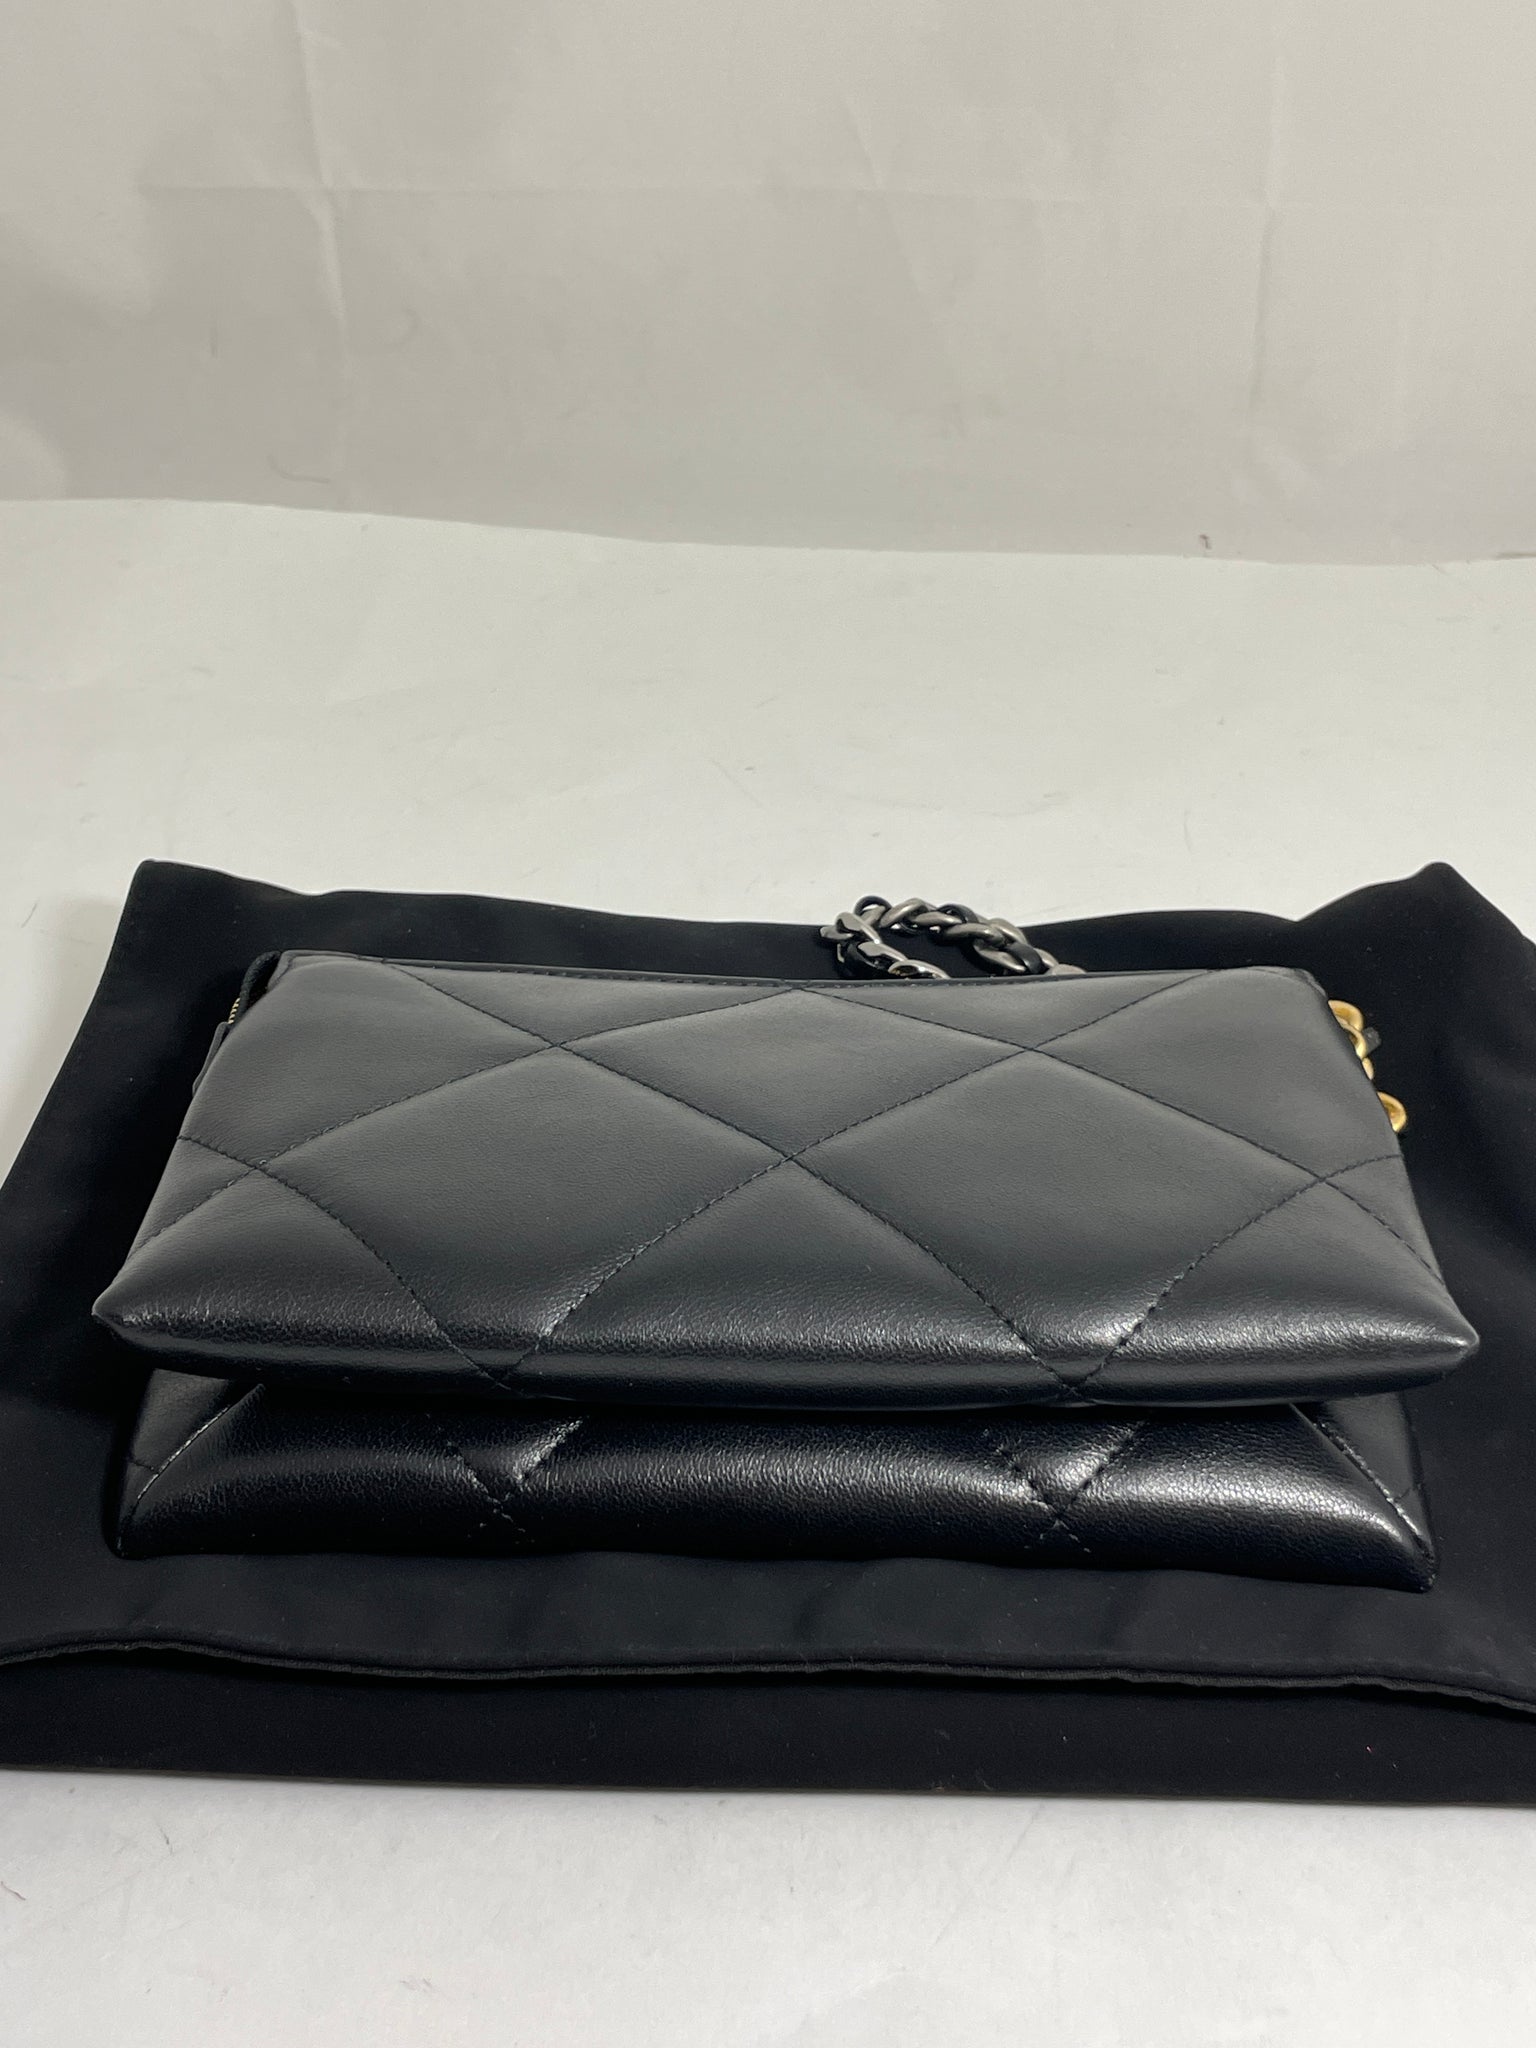 Chanel 19 Black Quilted Wristlet Clutch Bag